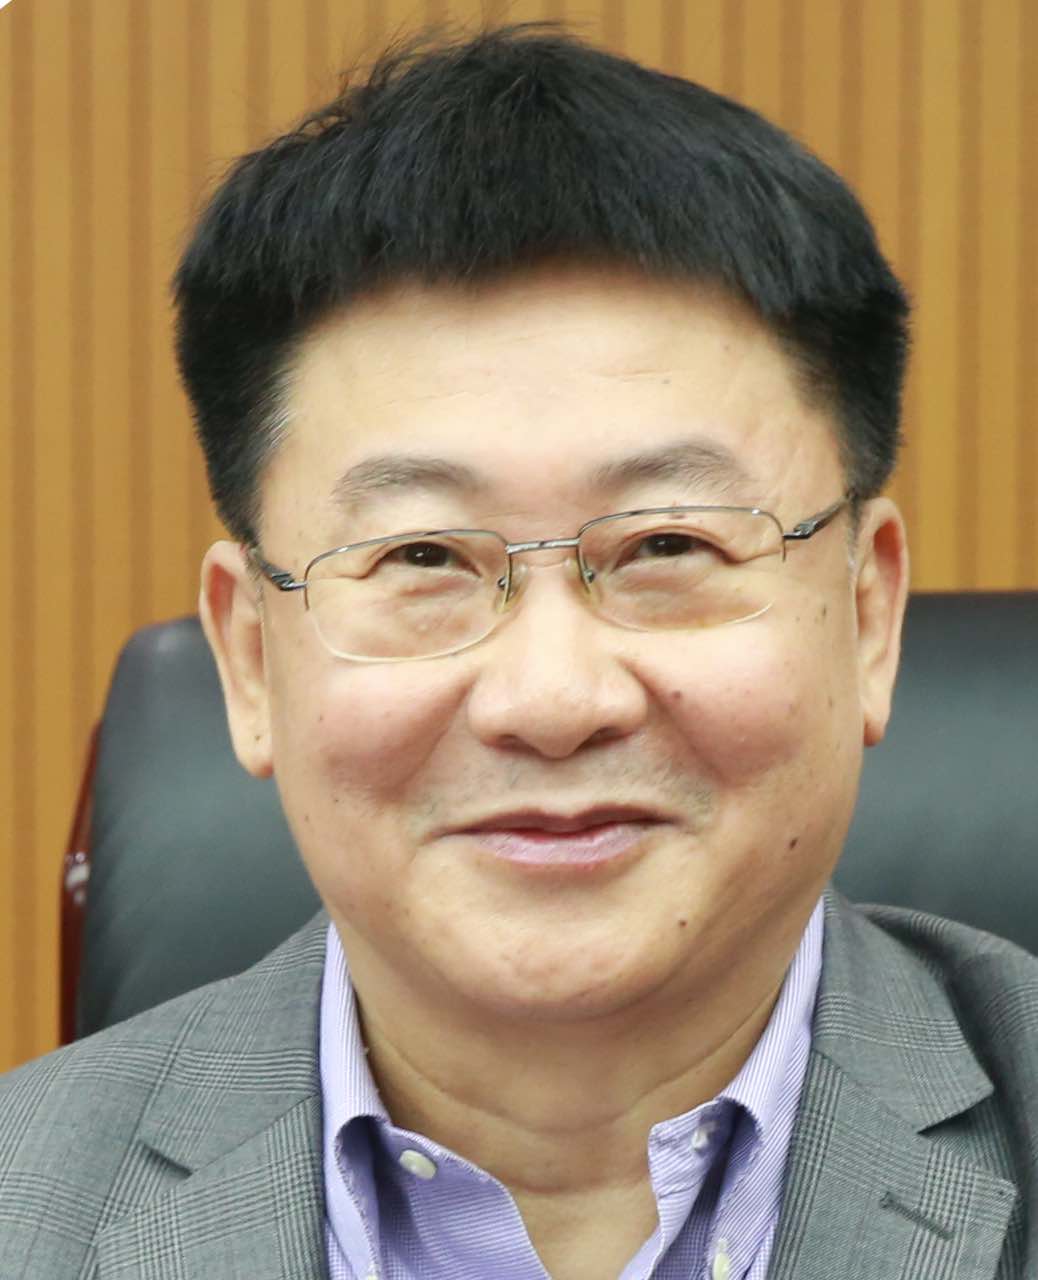 Mr. Xihui Zhen